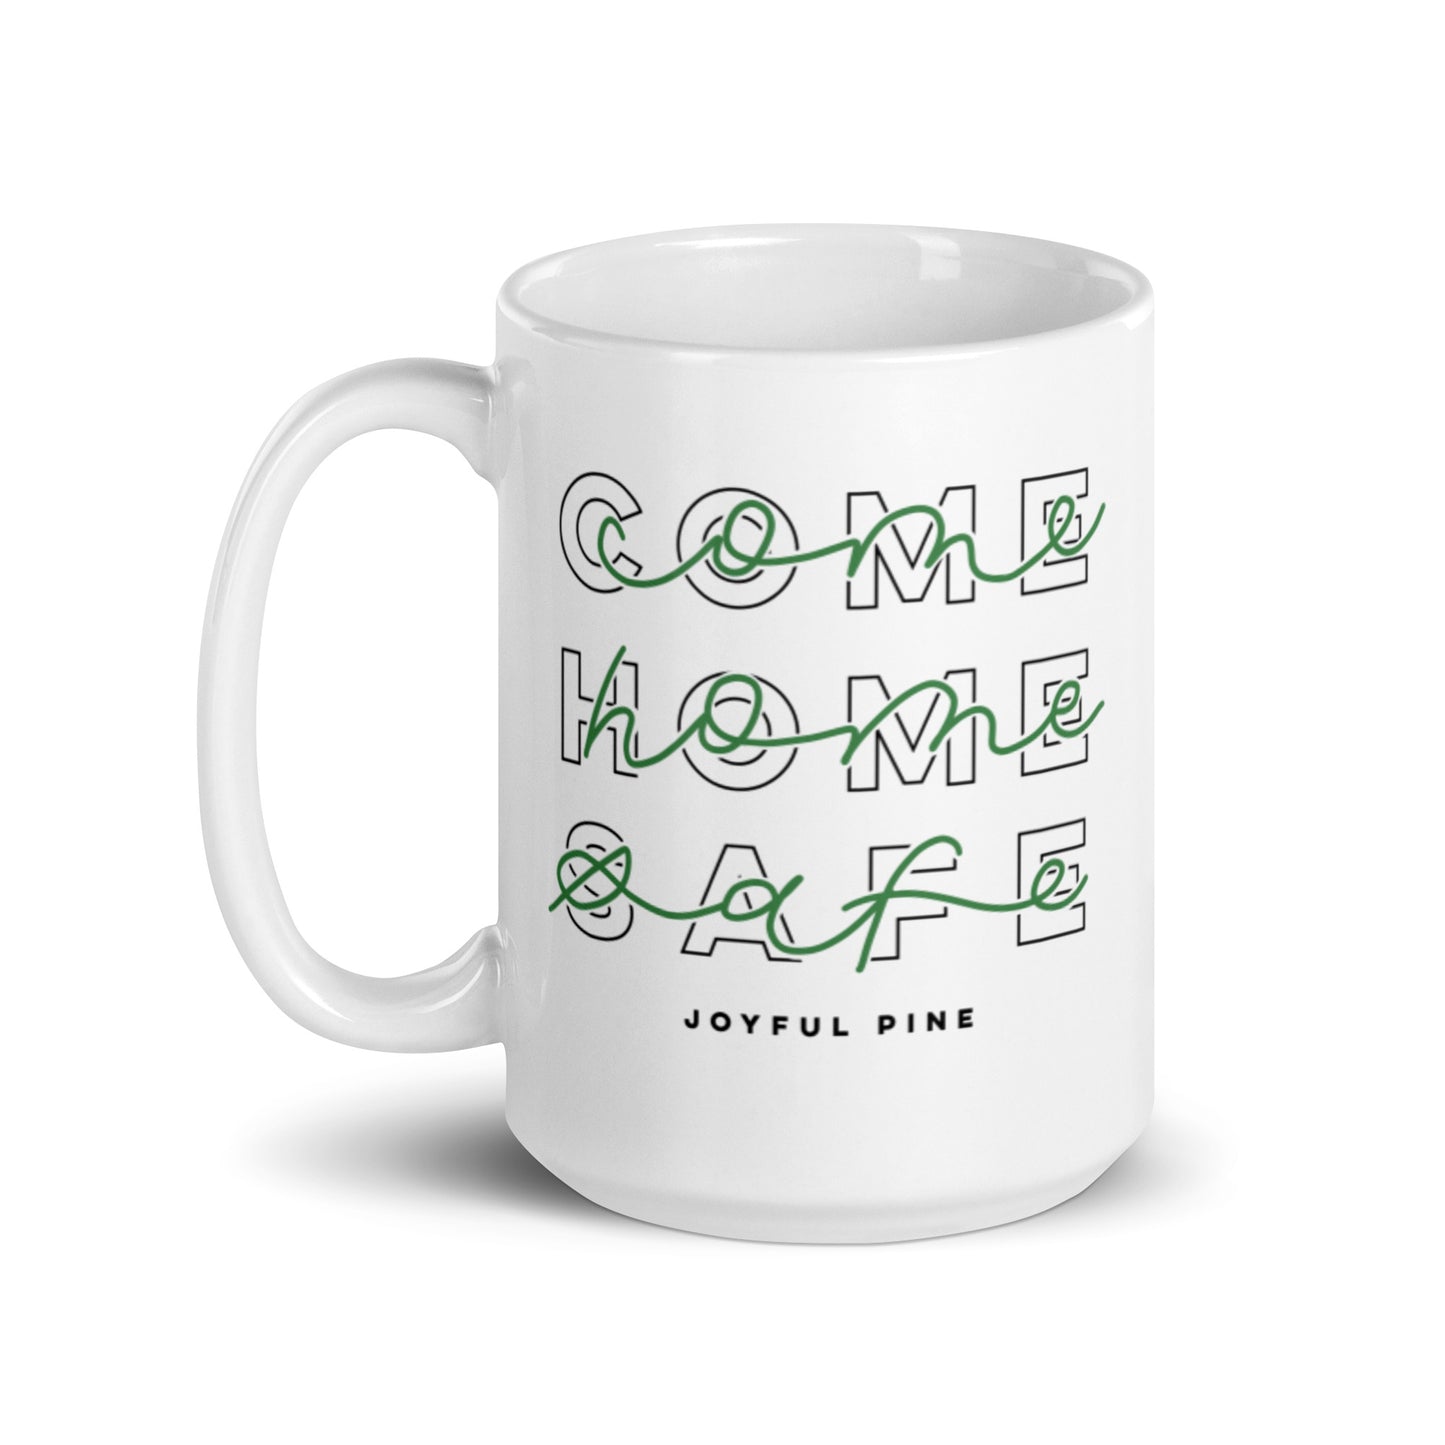 Come Home Safe Mug - Military